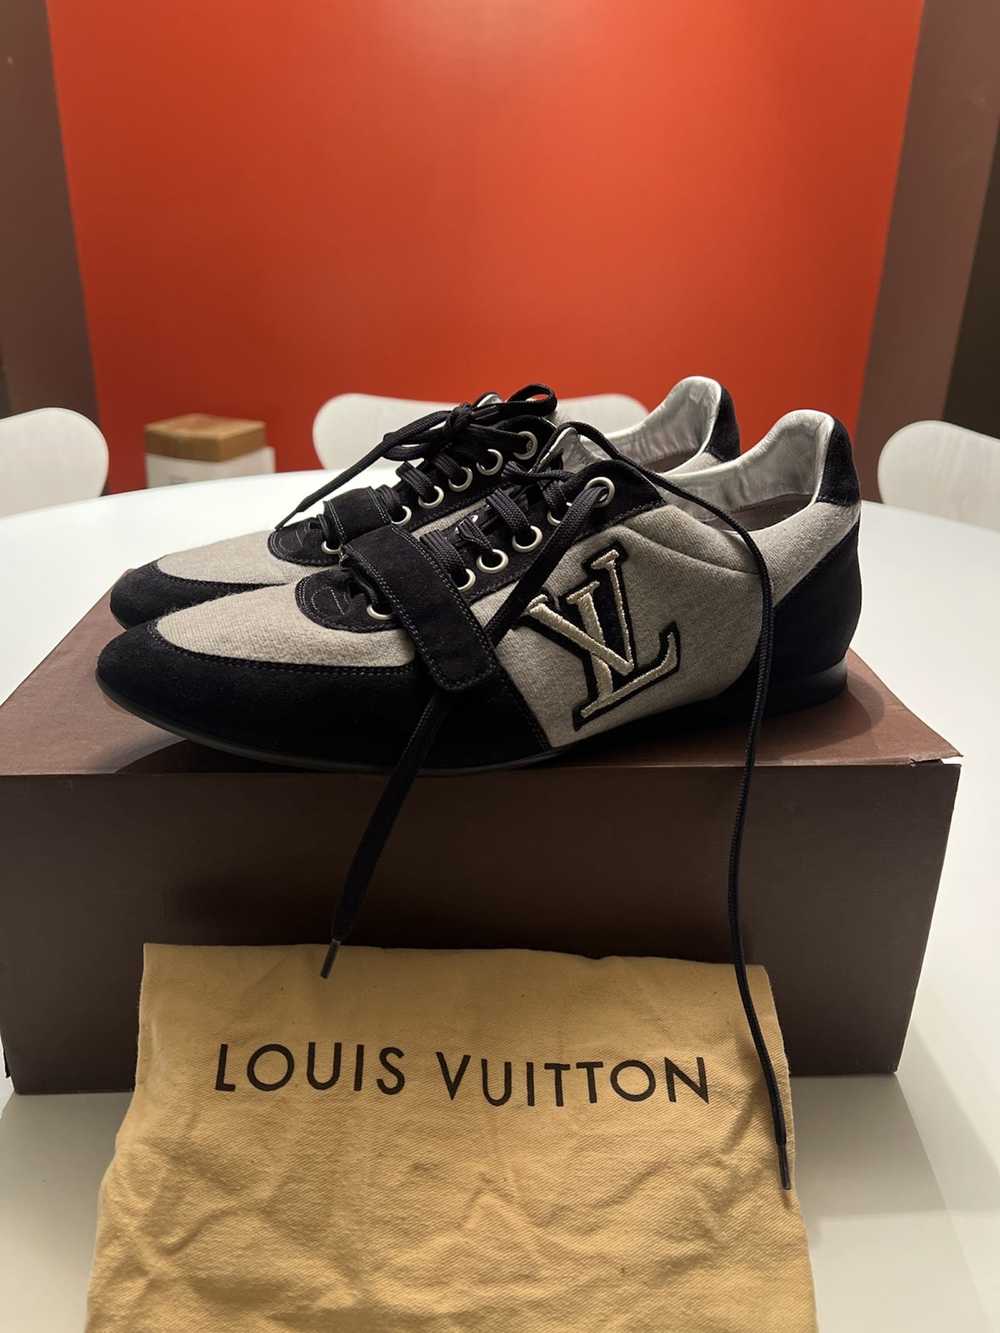 Louis Vuitton Louis Vuitton sneakers - image 3